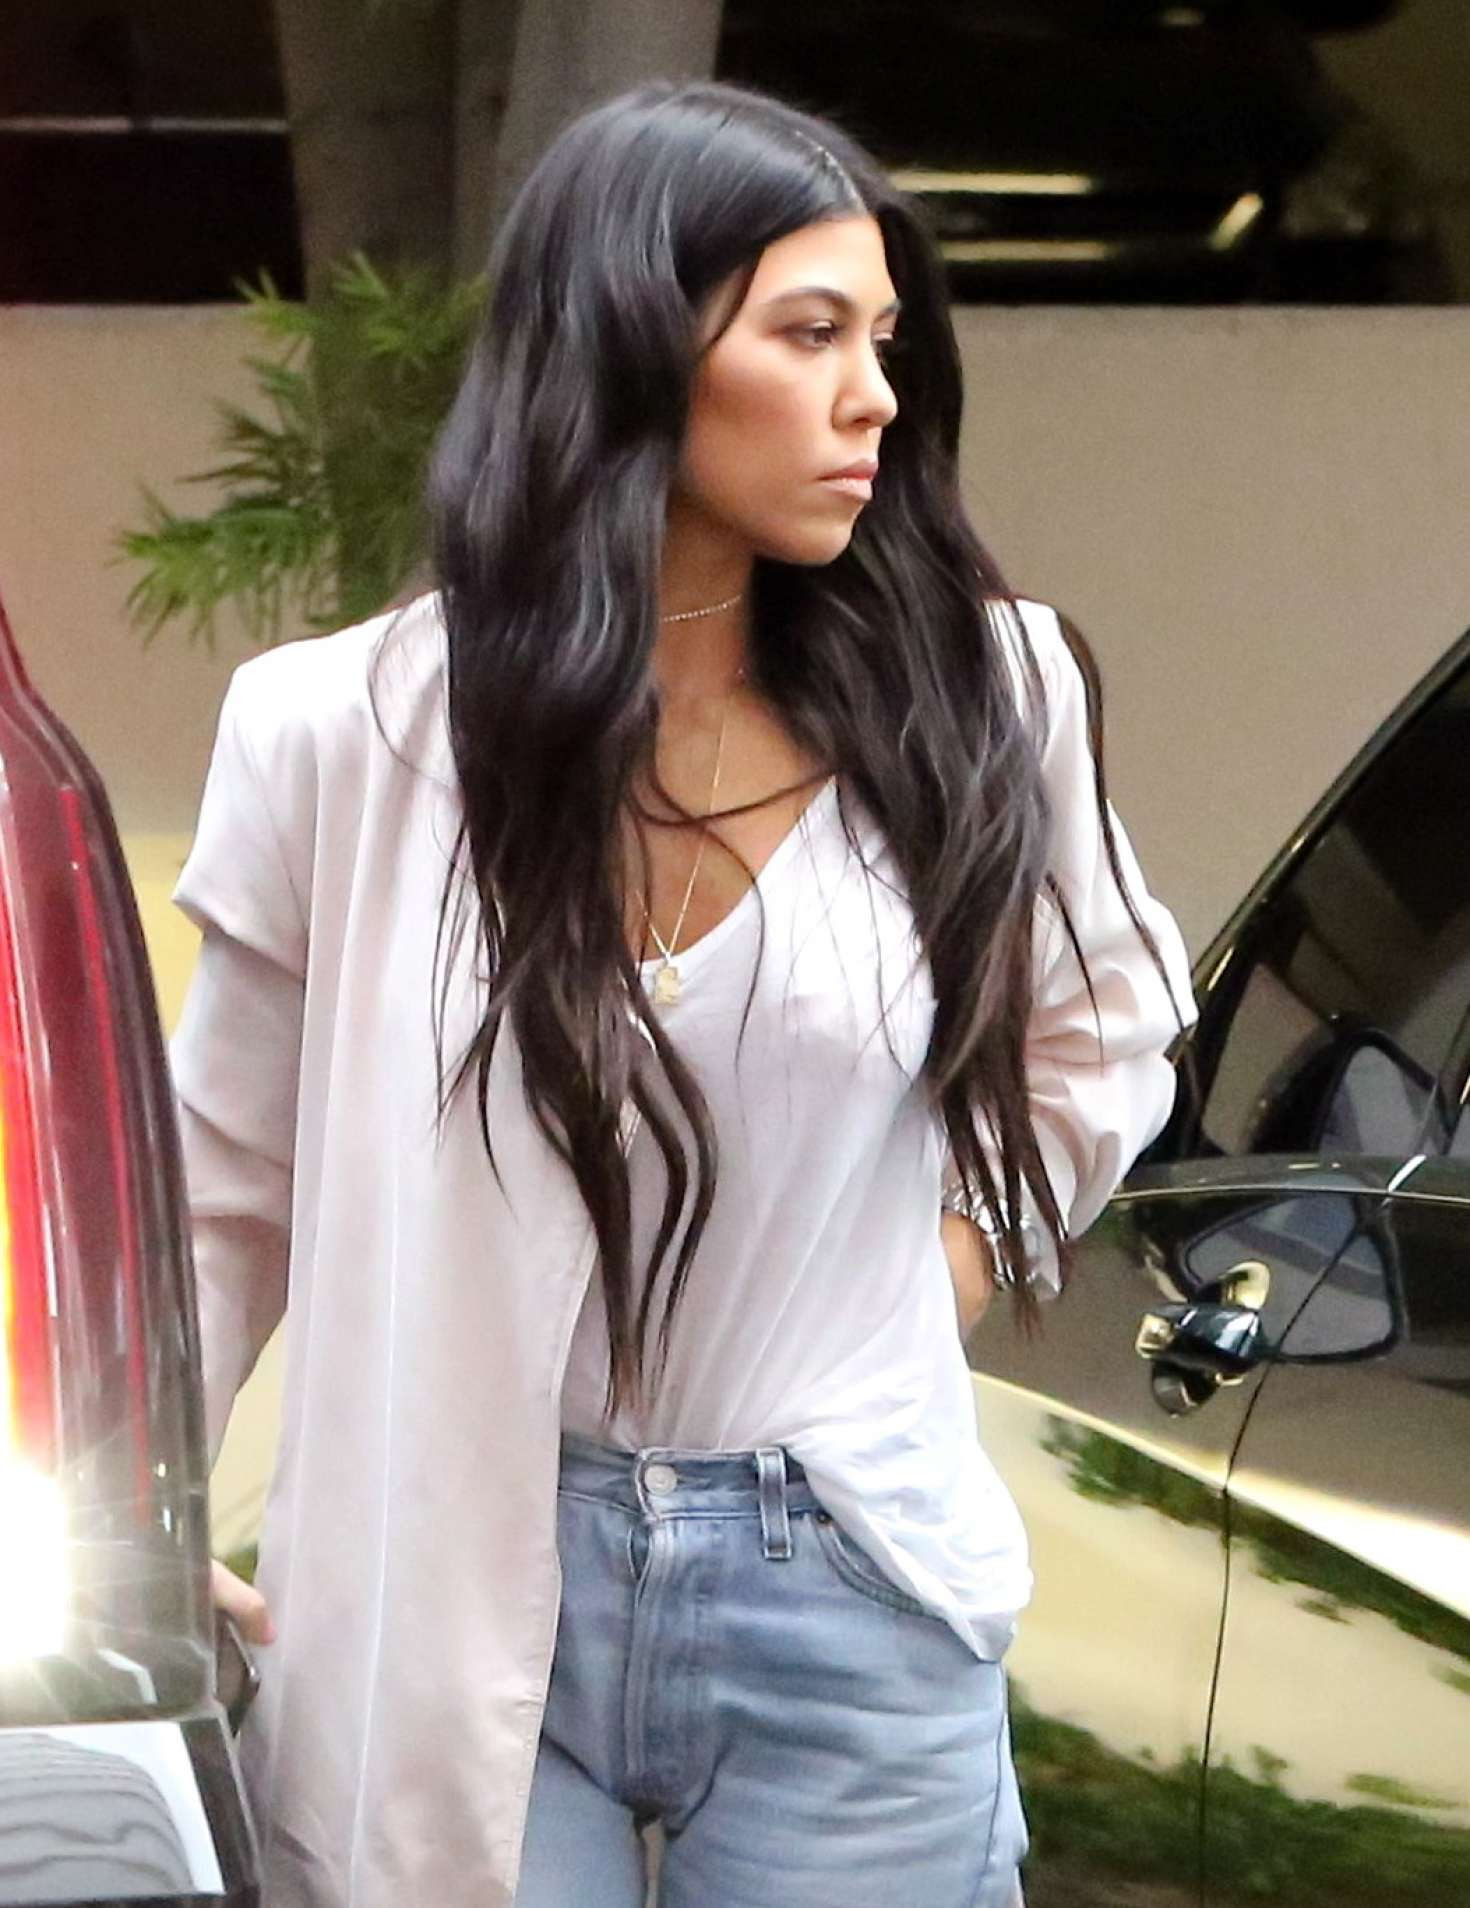 Kourtney Kardashian in Ripped Jeans out in Calabasas